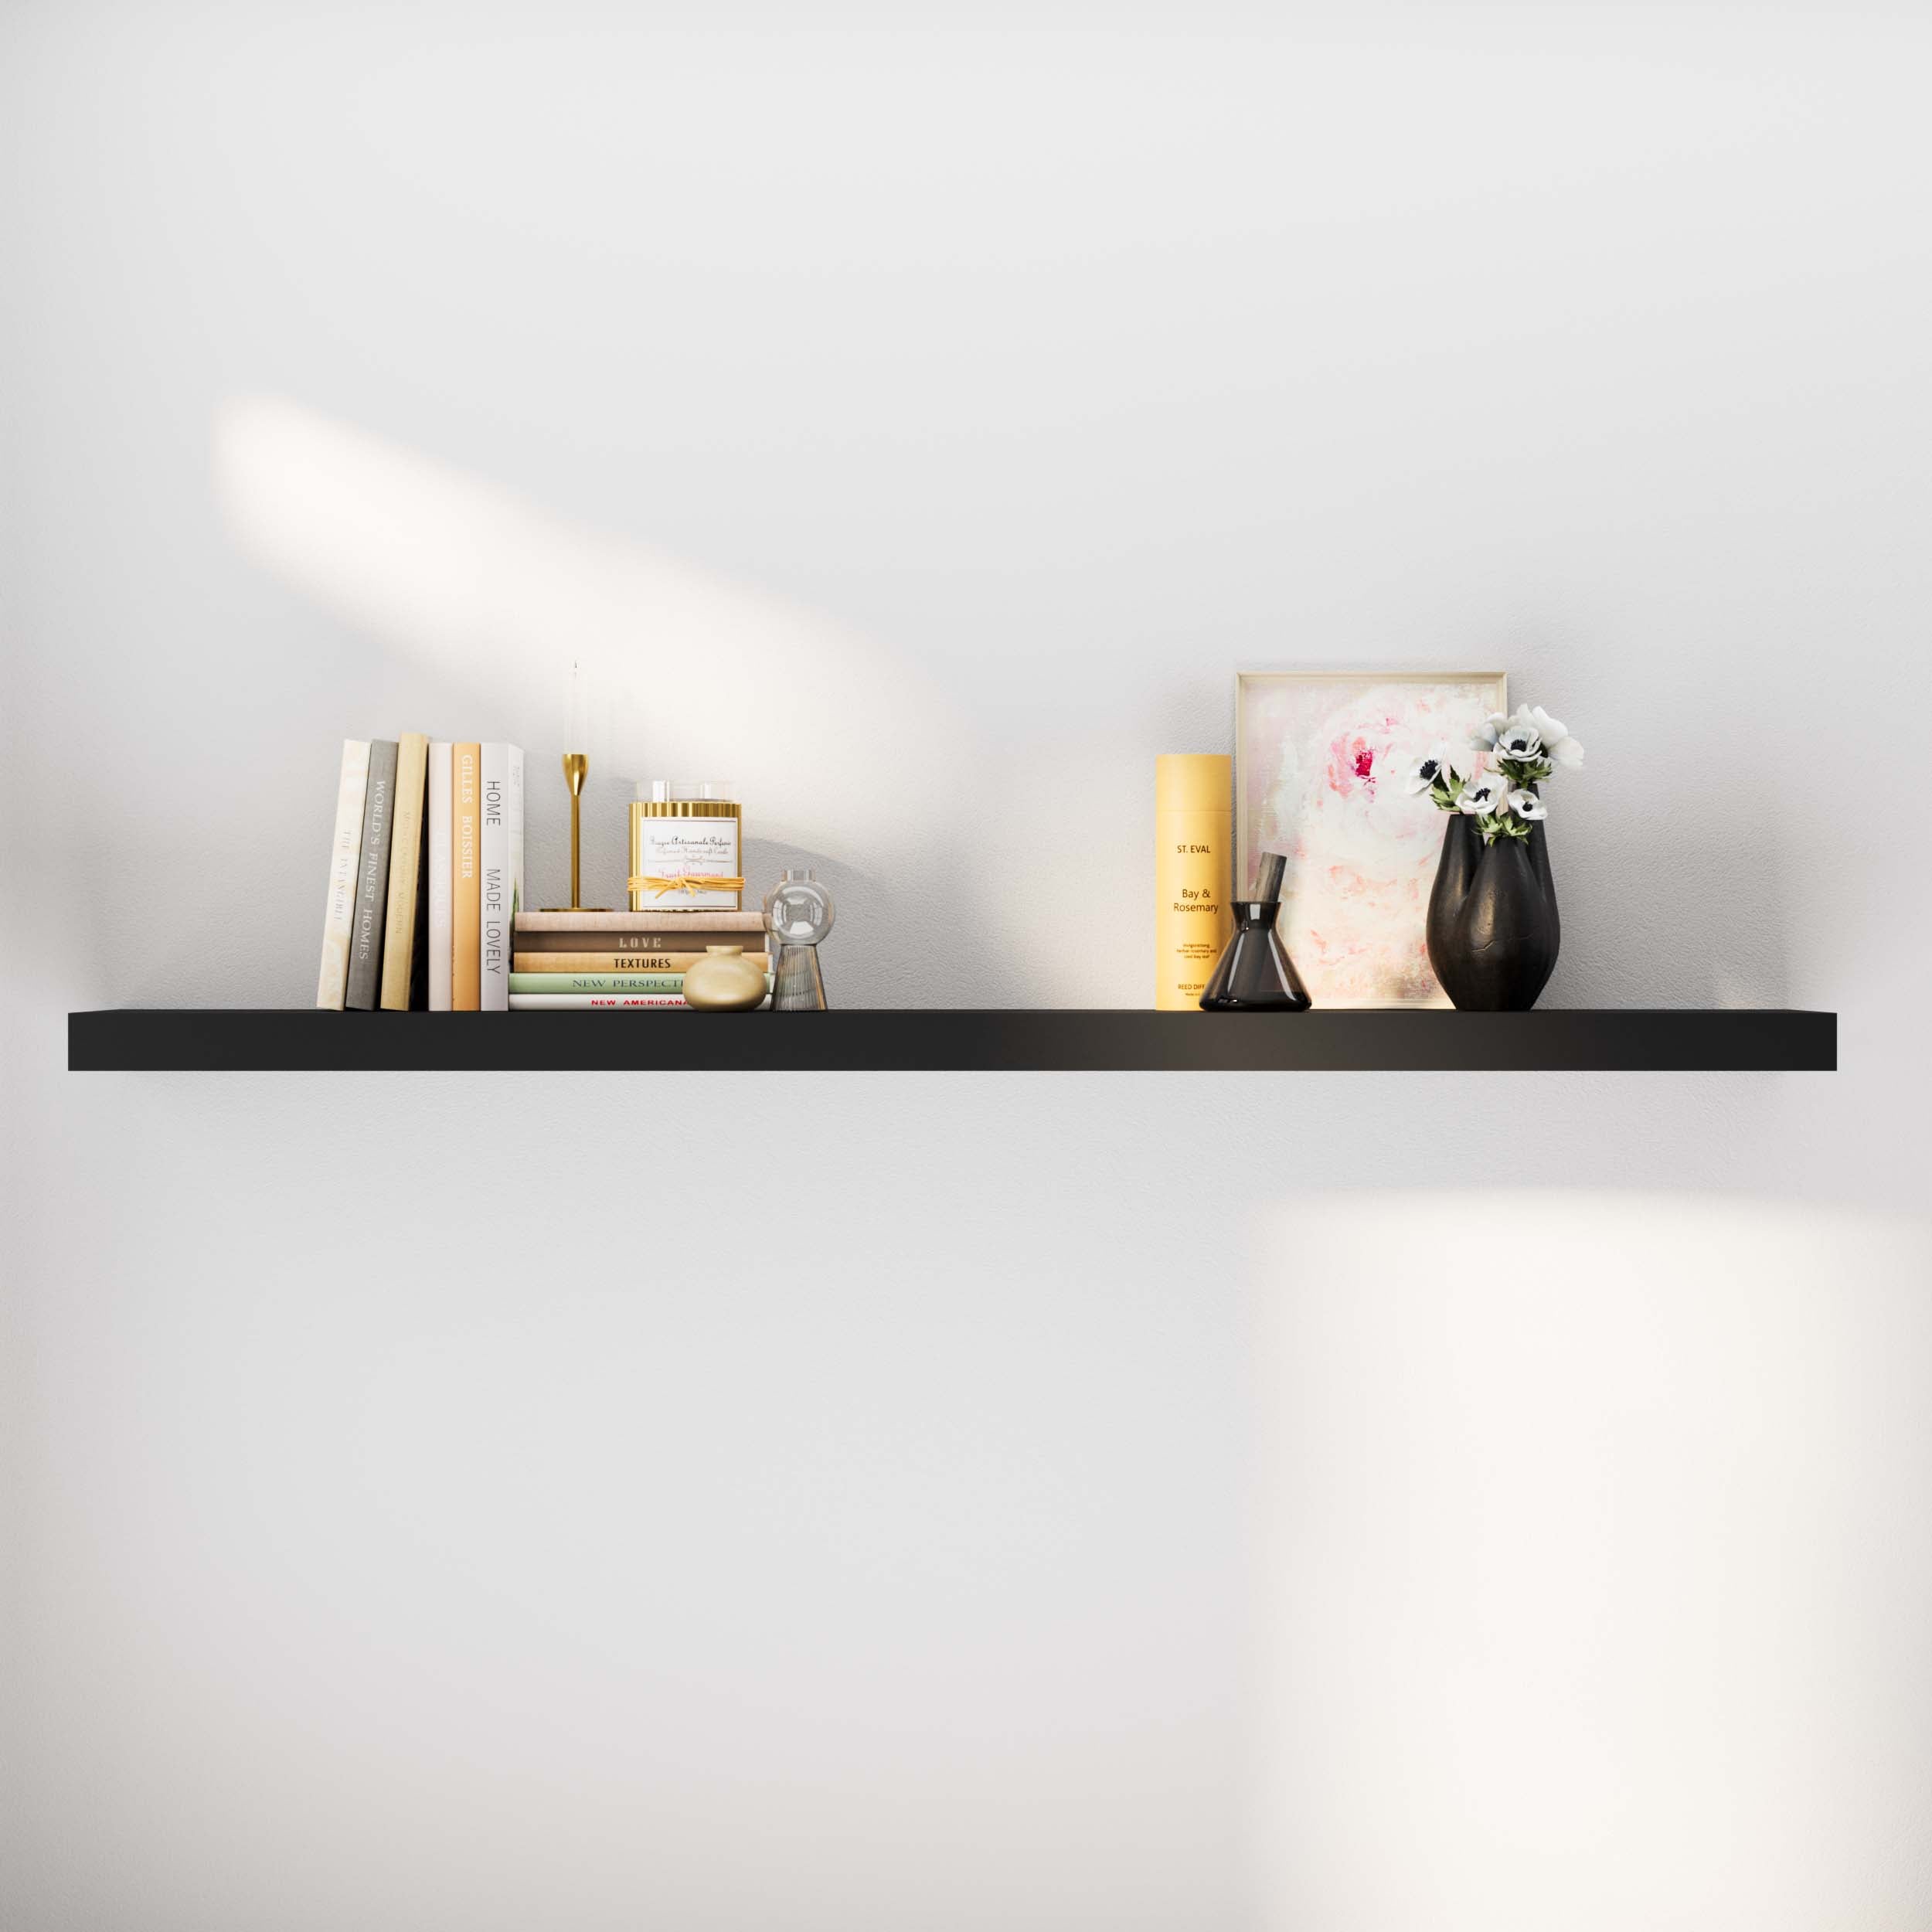 A stylish black floating shelf holds a vase, books, and a decorative frame, enhancing a minimalistic room decor.